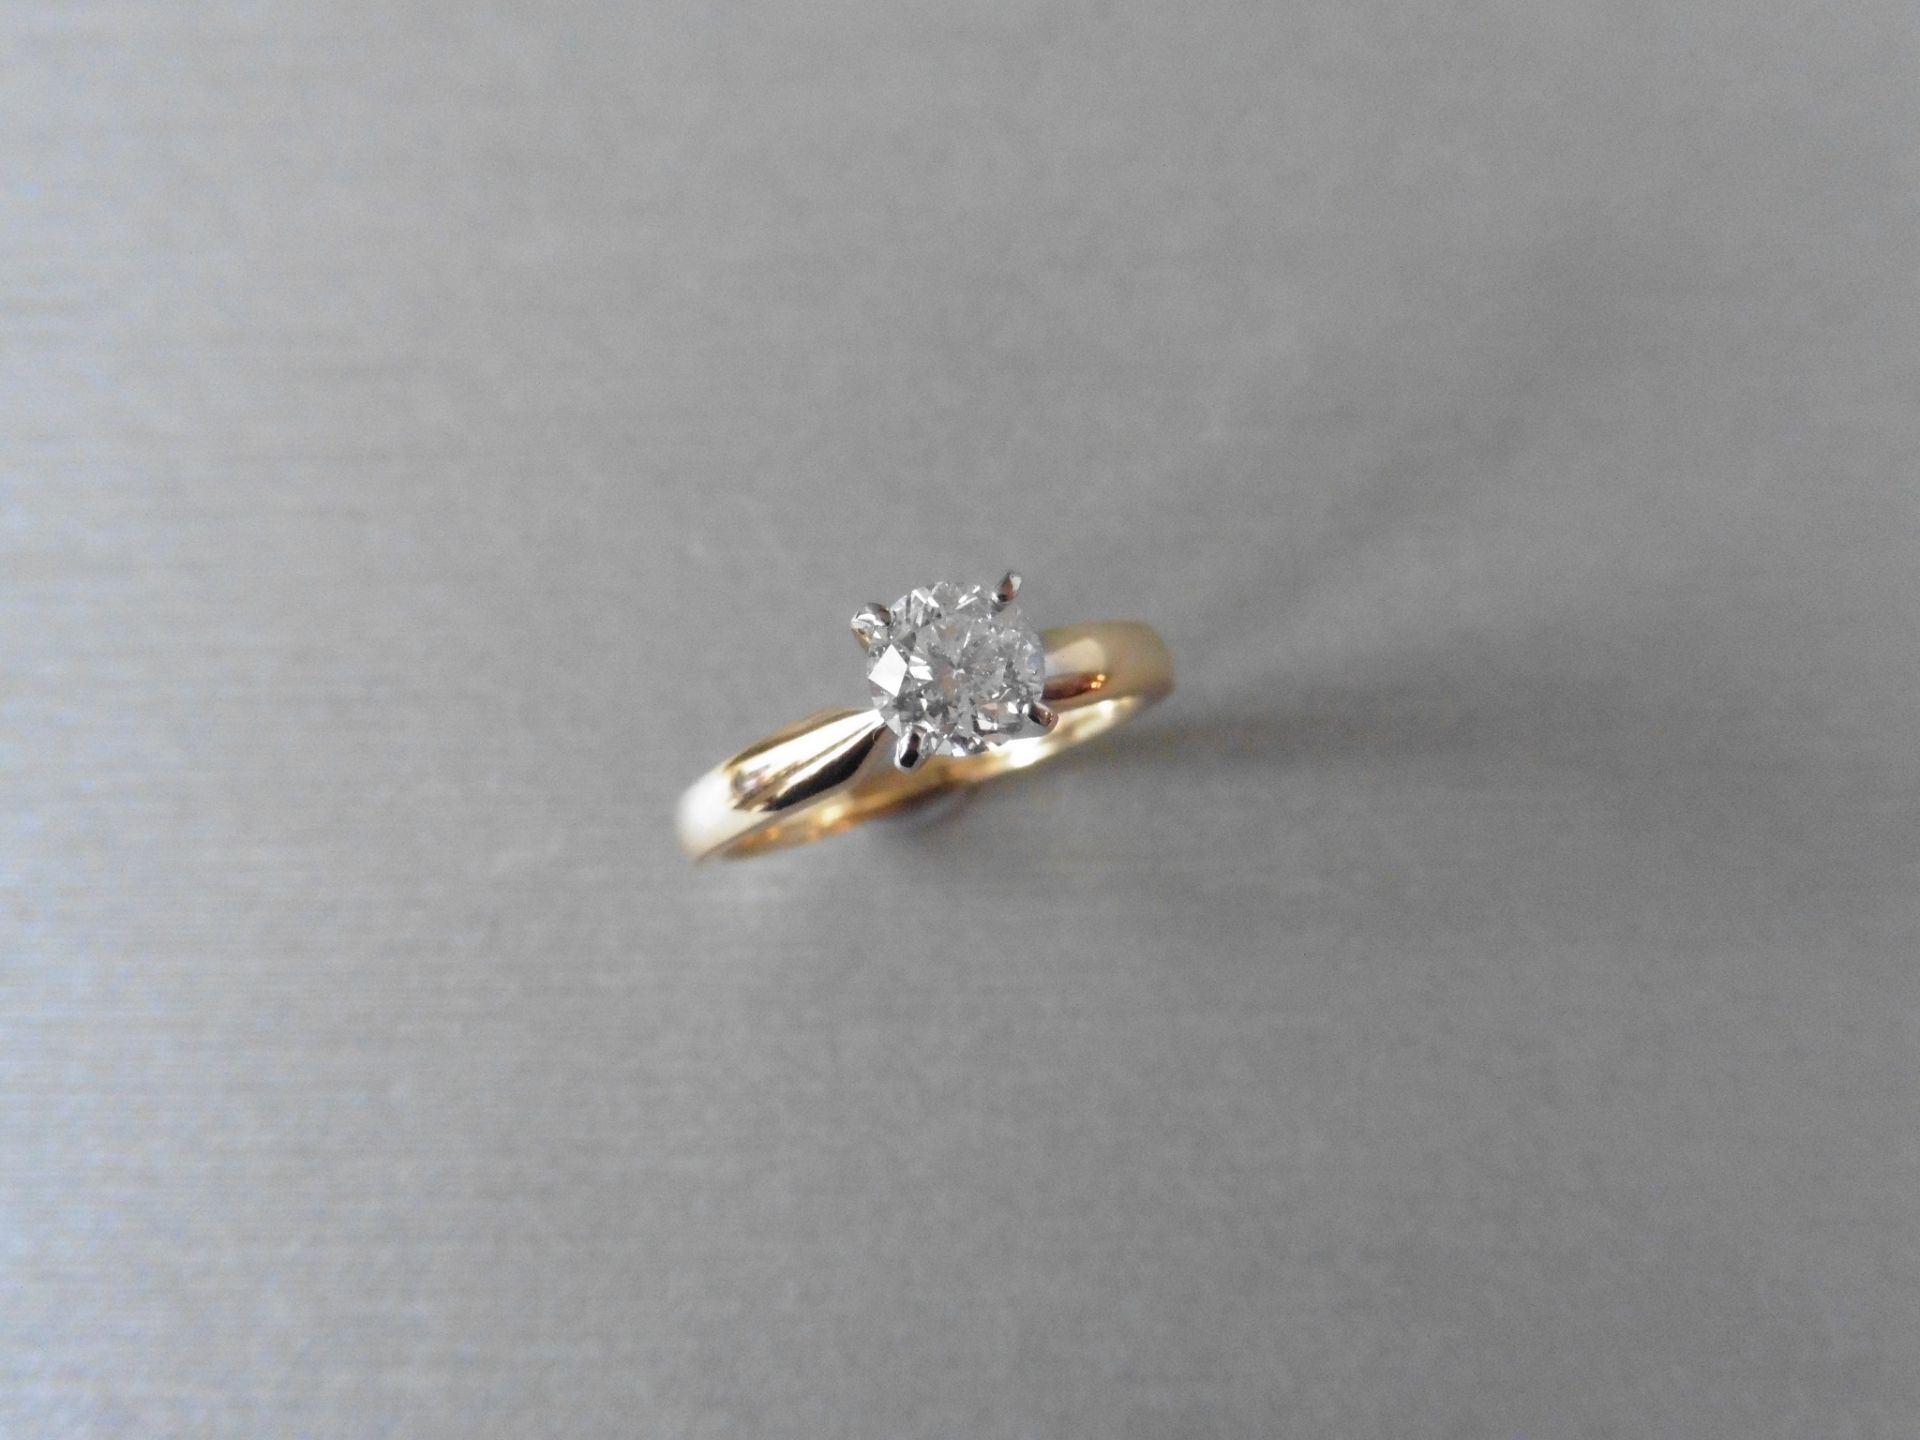 1.08ct diamond solitaire ring. Brilliant cut diamond, E colour, si2 clarity. Only 9% BP